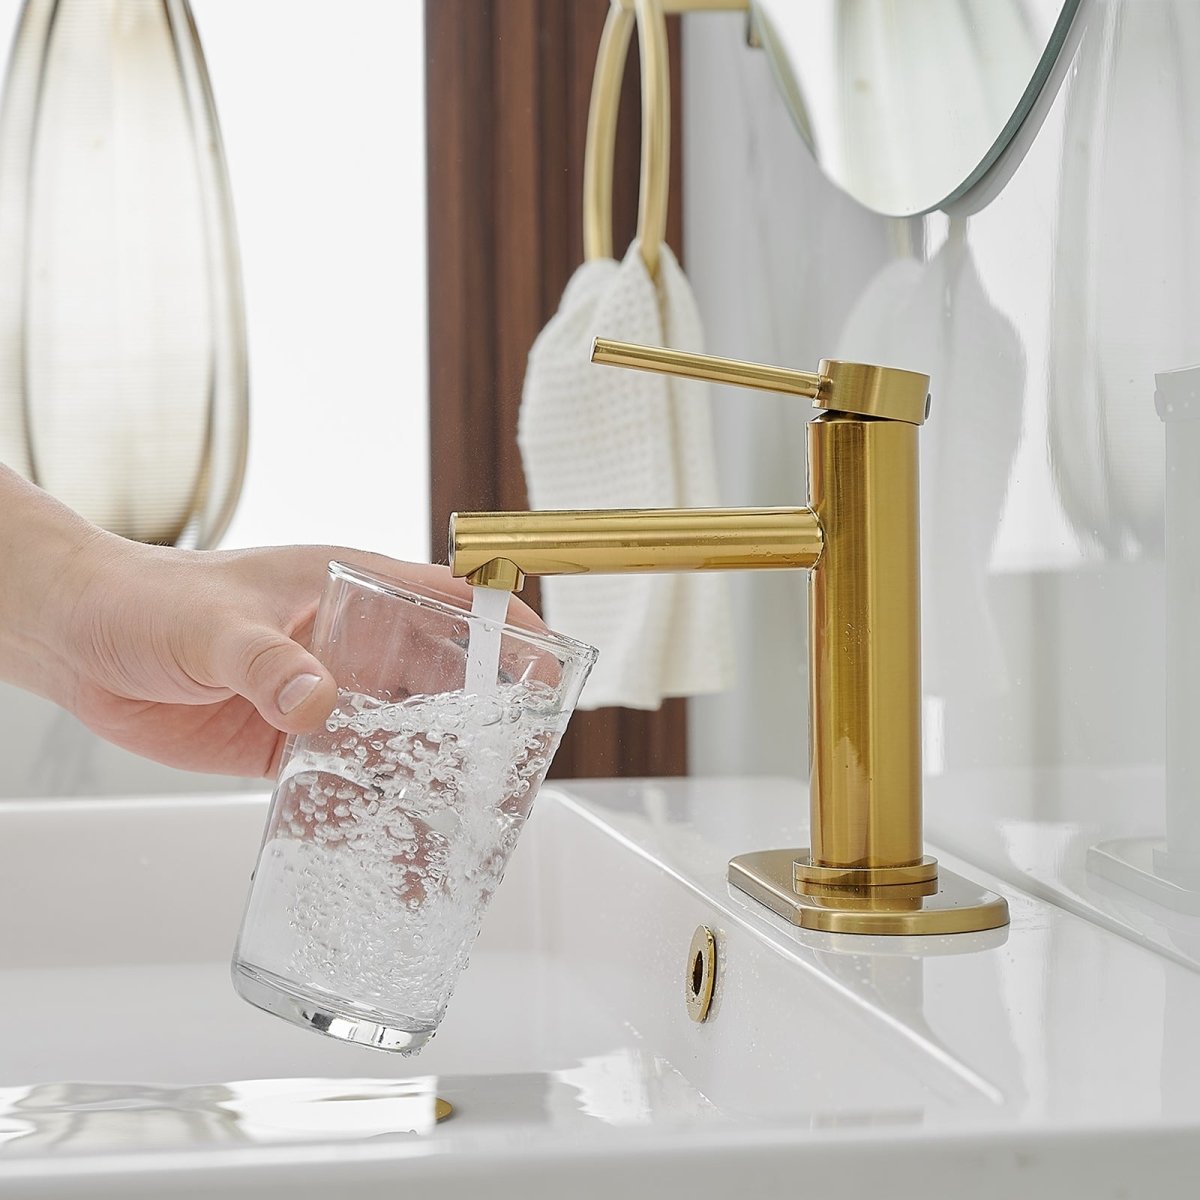 Vanity Single Handle with Supply Hose Bathroom Faucets Gold - buyfaucet.com